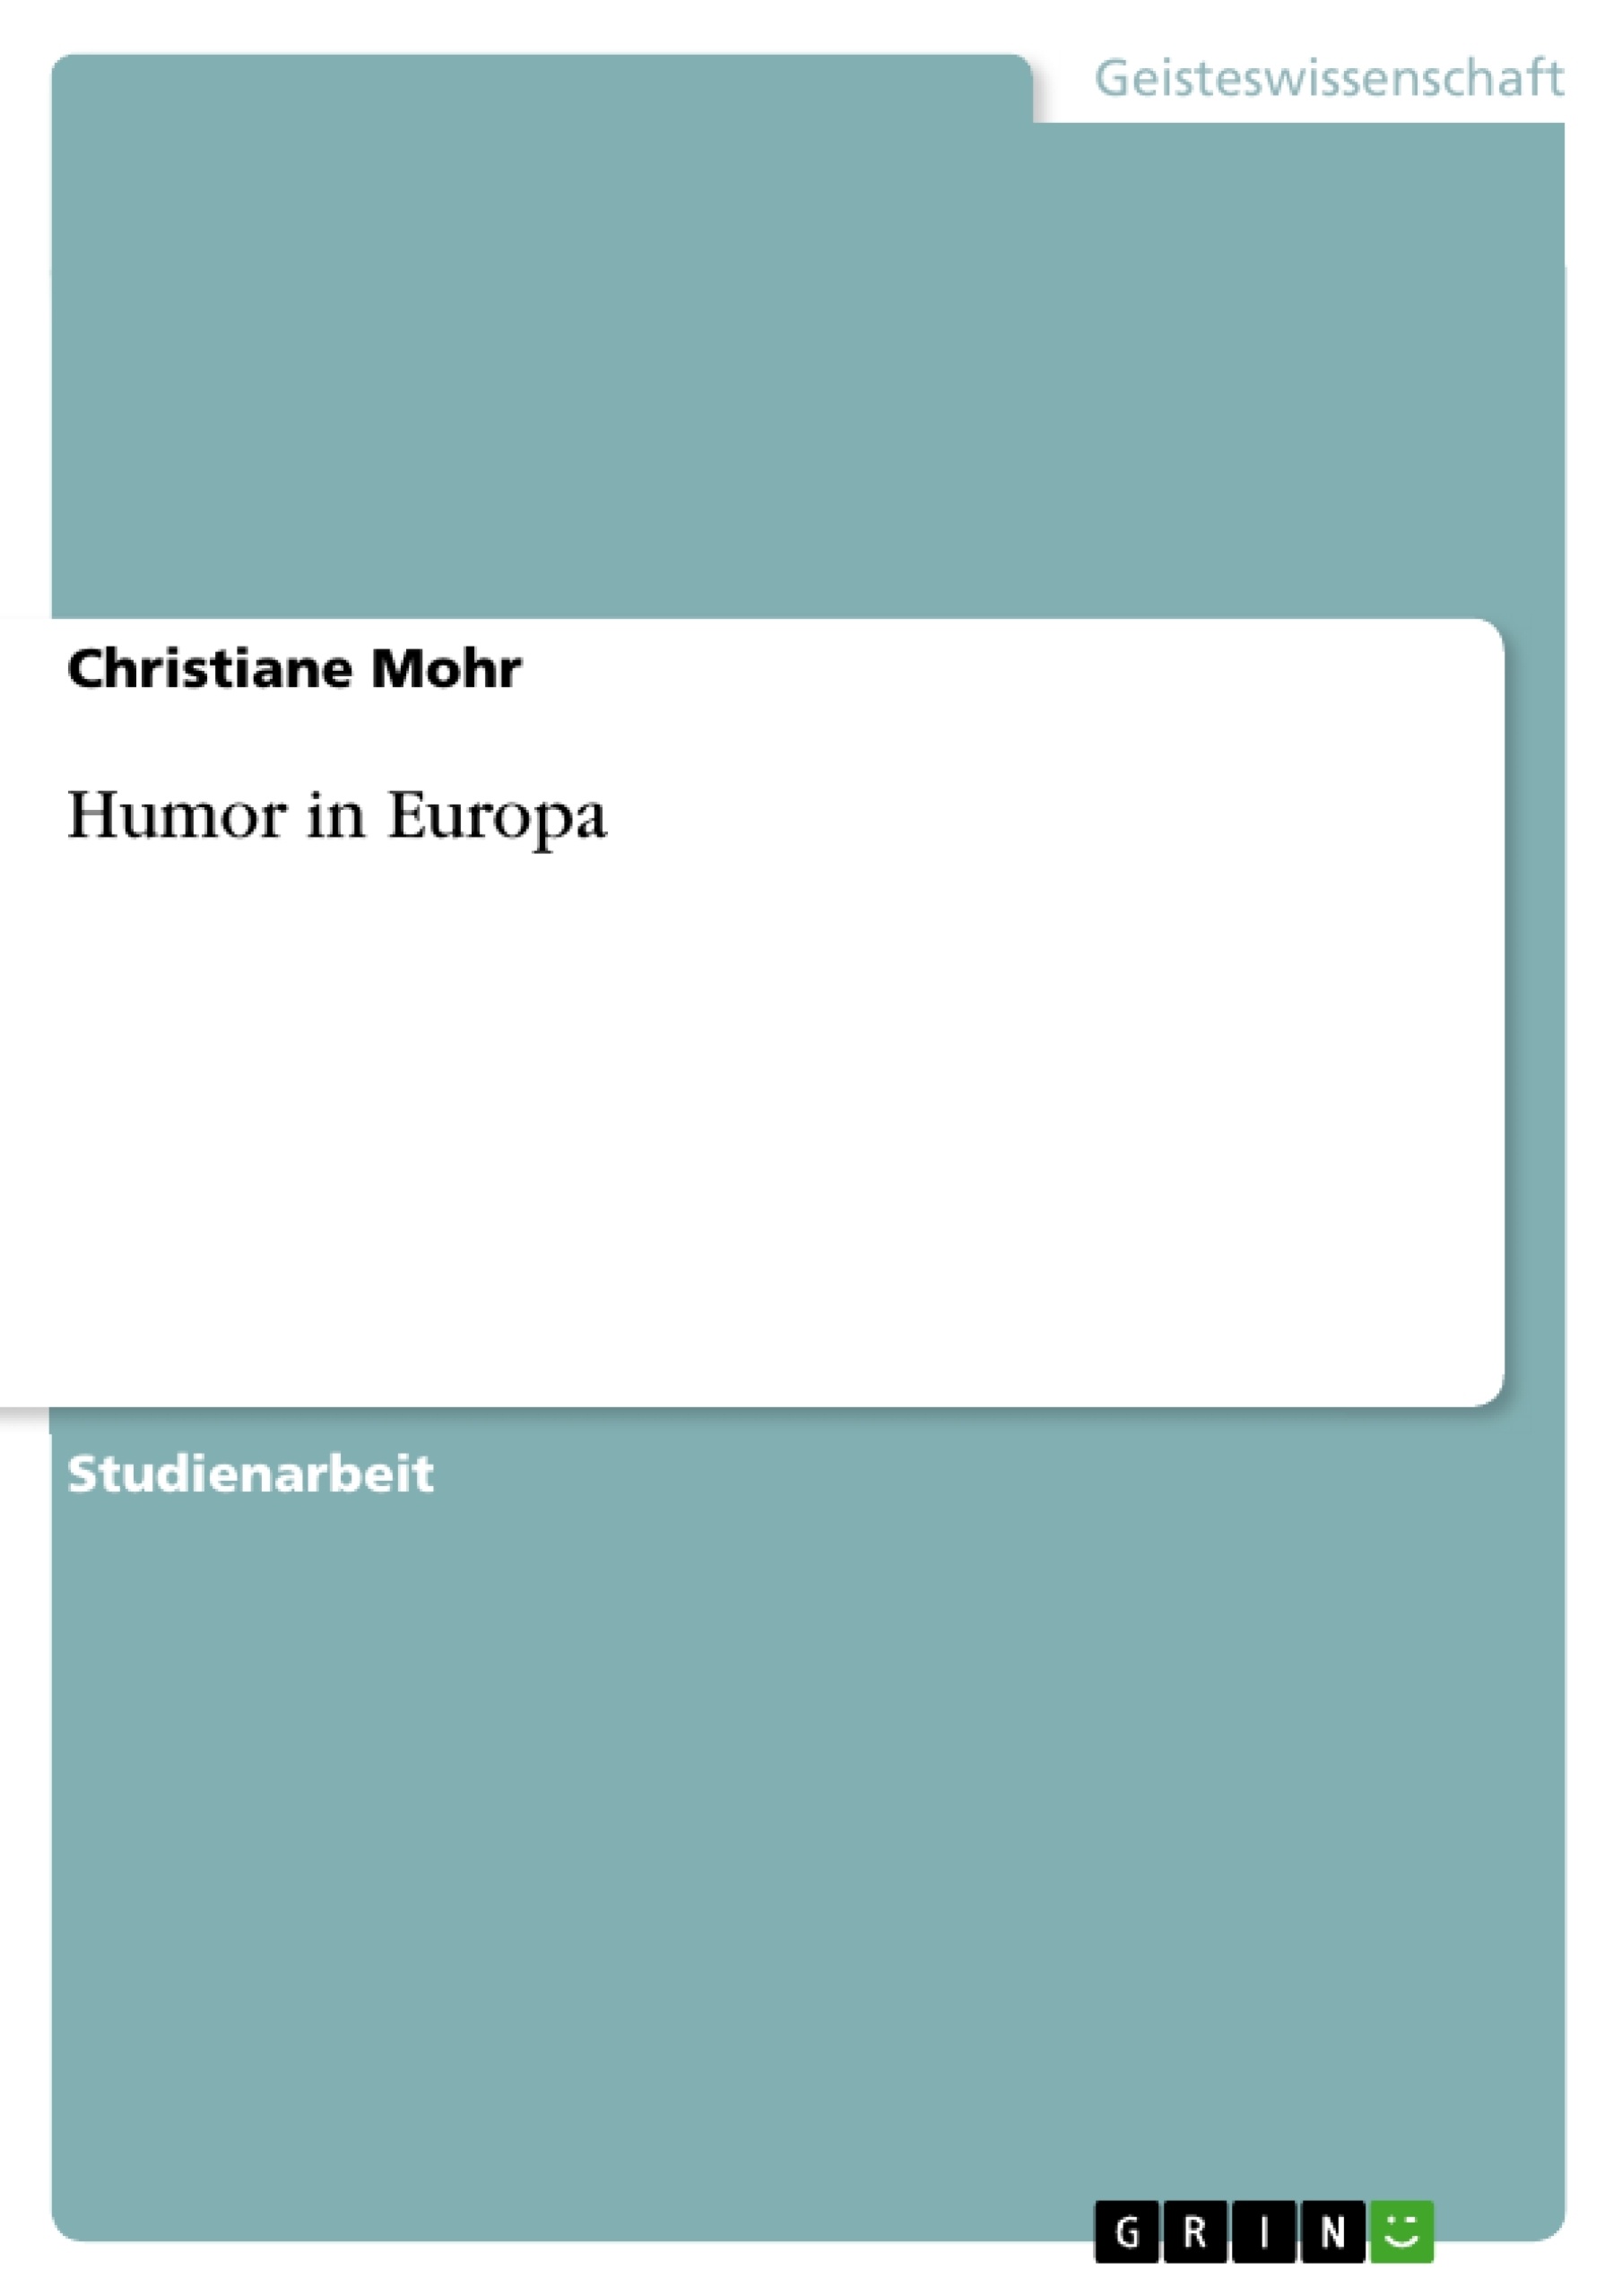 Titre: Humor in Europa